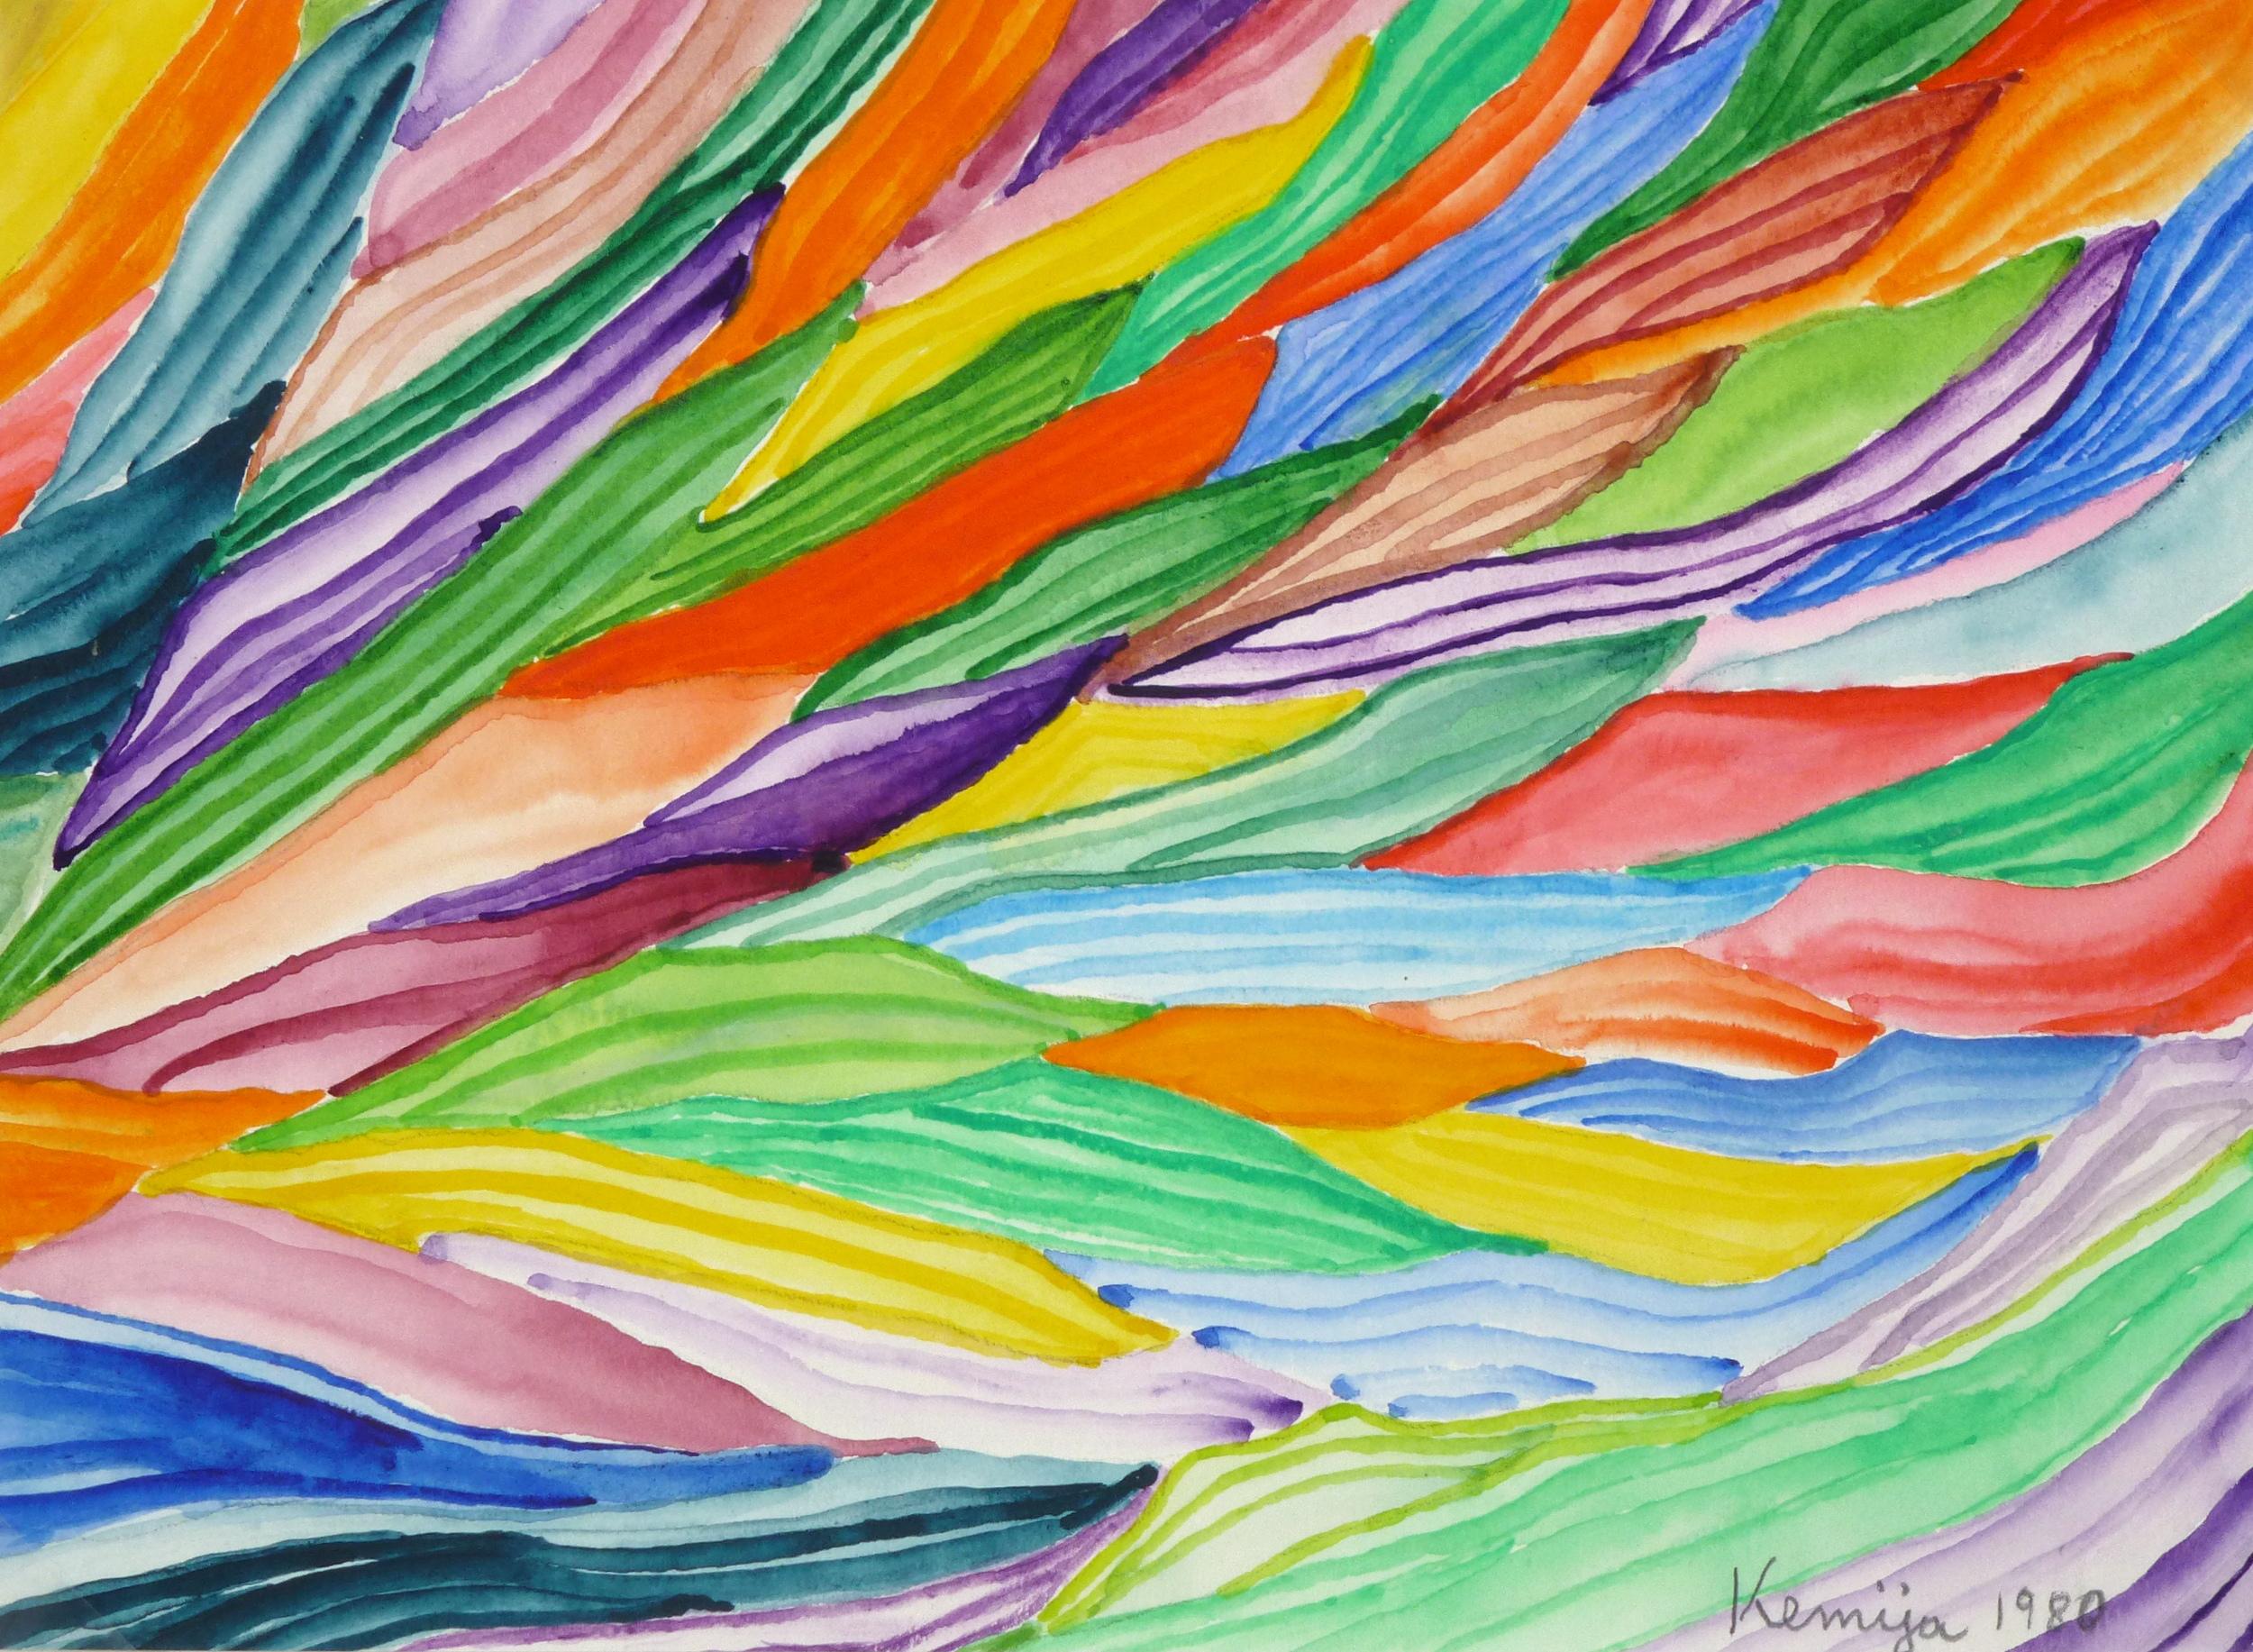 Abstract Art, Vivid Watercolor - Rolling Colors, Kemija, 1980